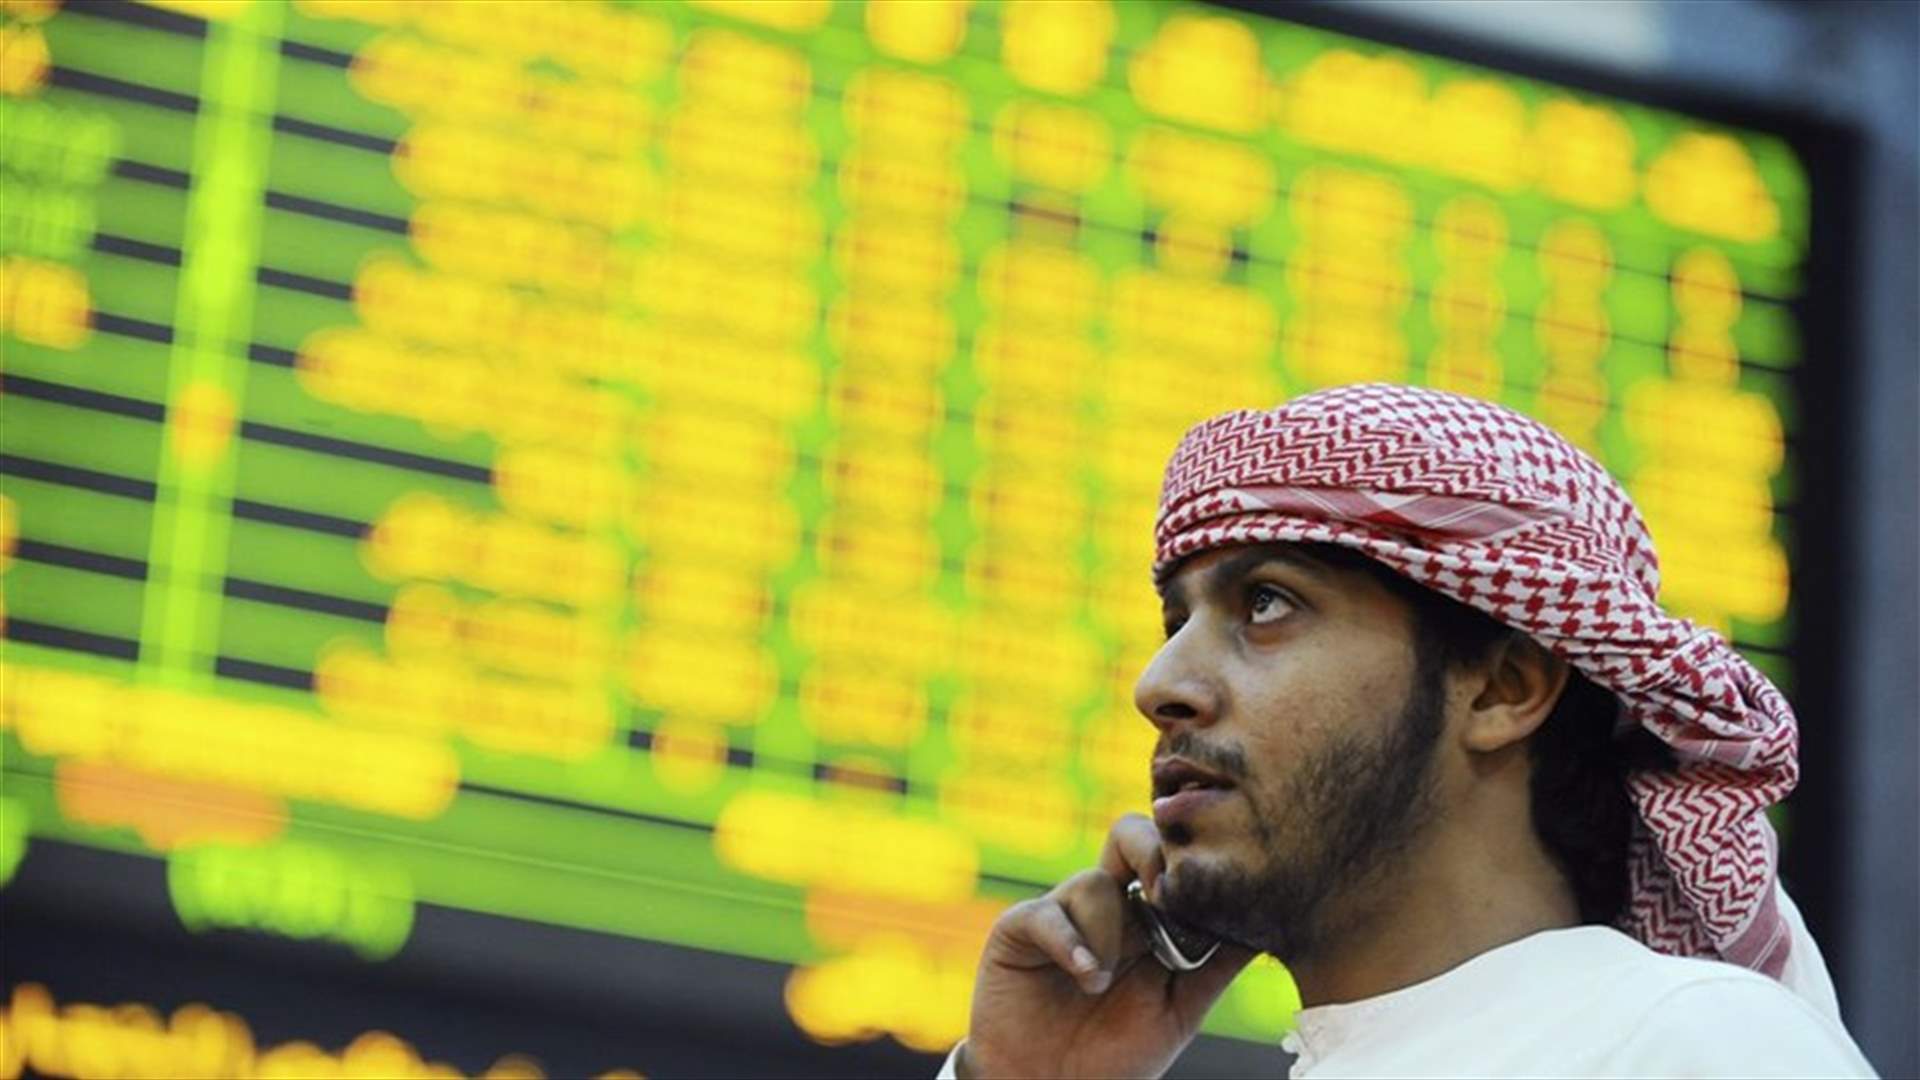 Most Gulf markets fall on economic downturn concerns: Qatar up